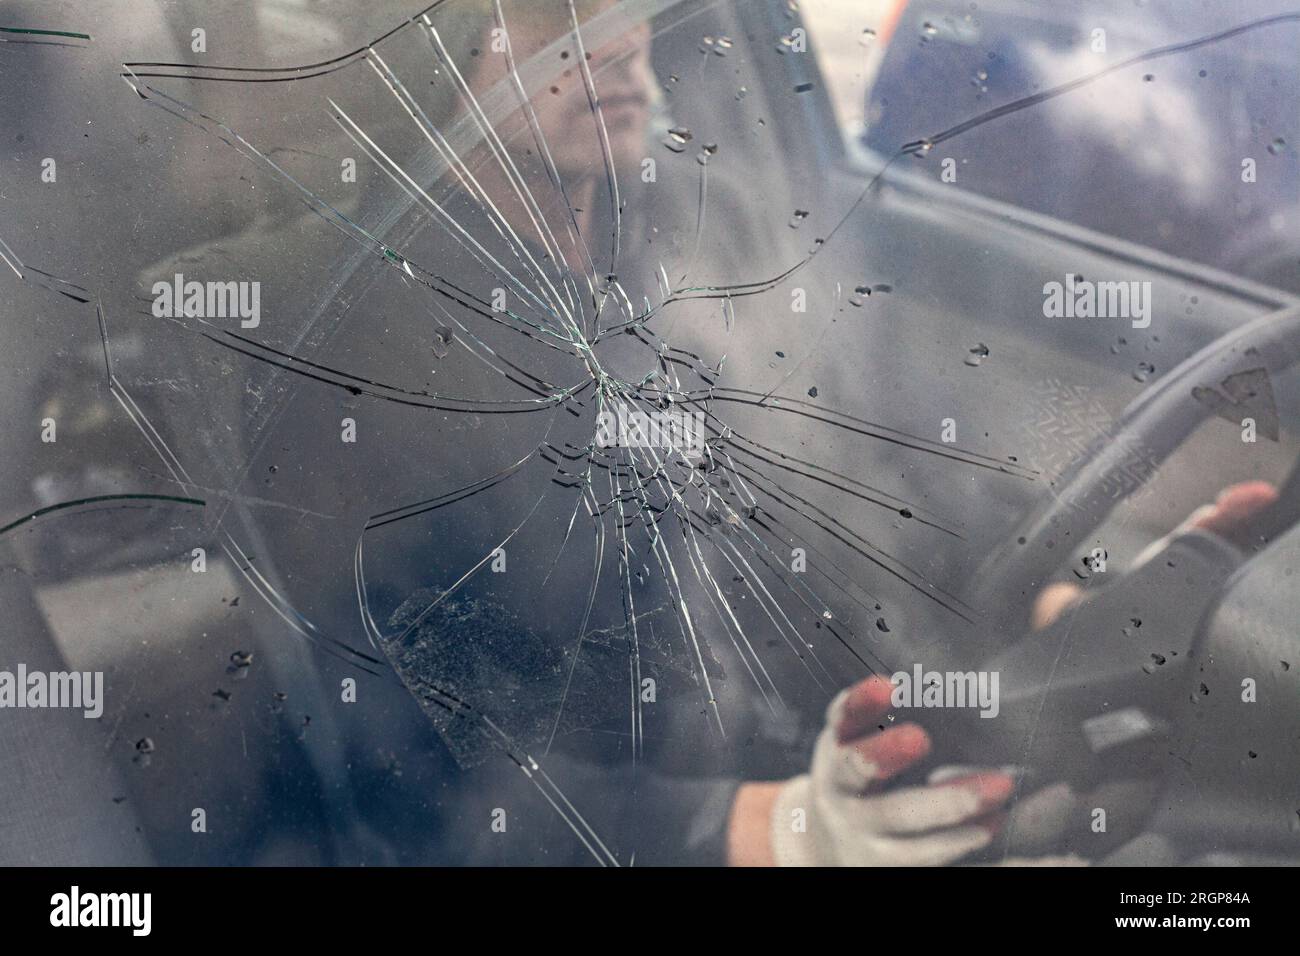 Cracks on glass of machine. Driver of car behind broken window. Stock Photo